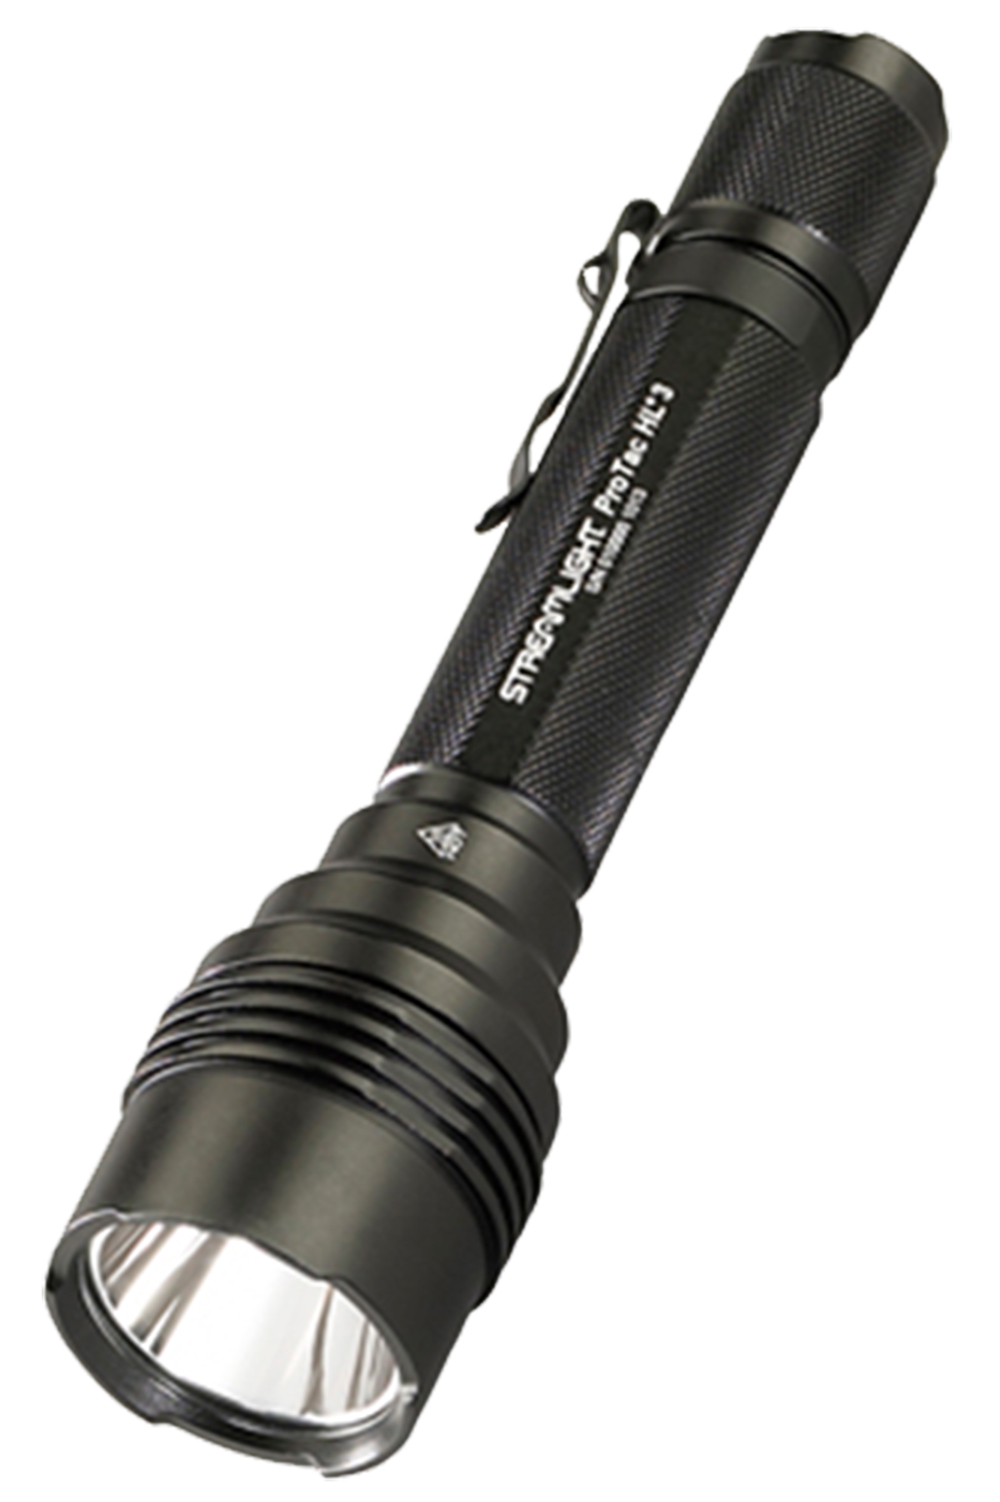 Streamlight ProTac HL 1100 Lumens CR123A Lithium (3) Black